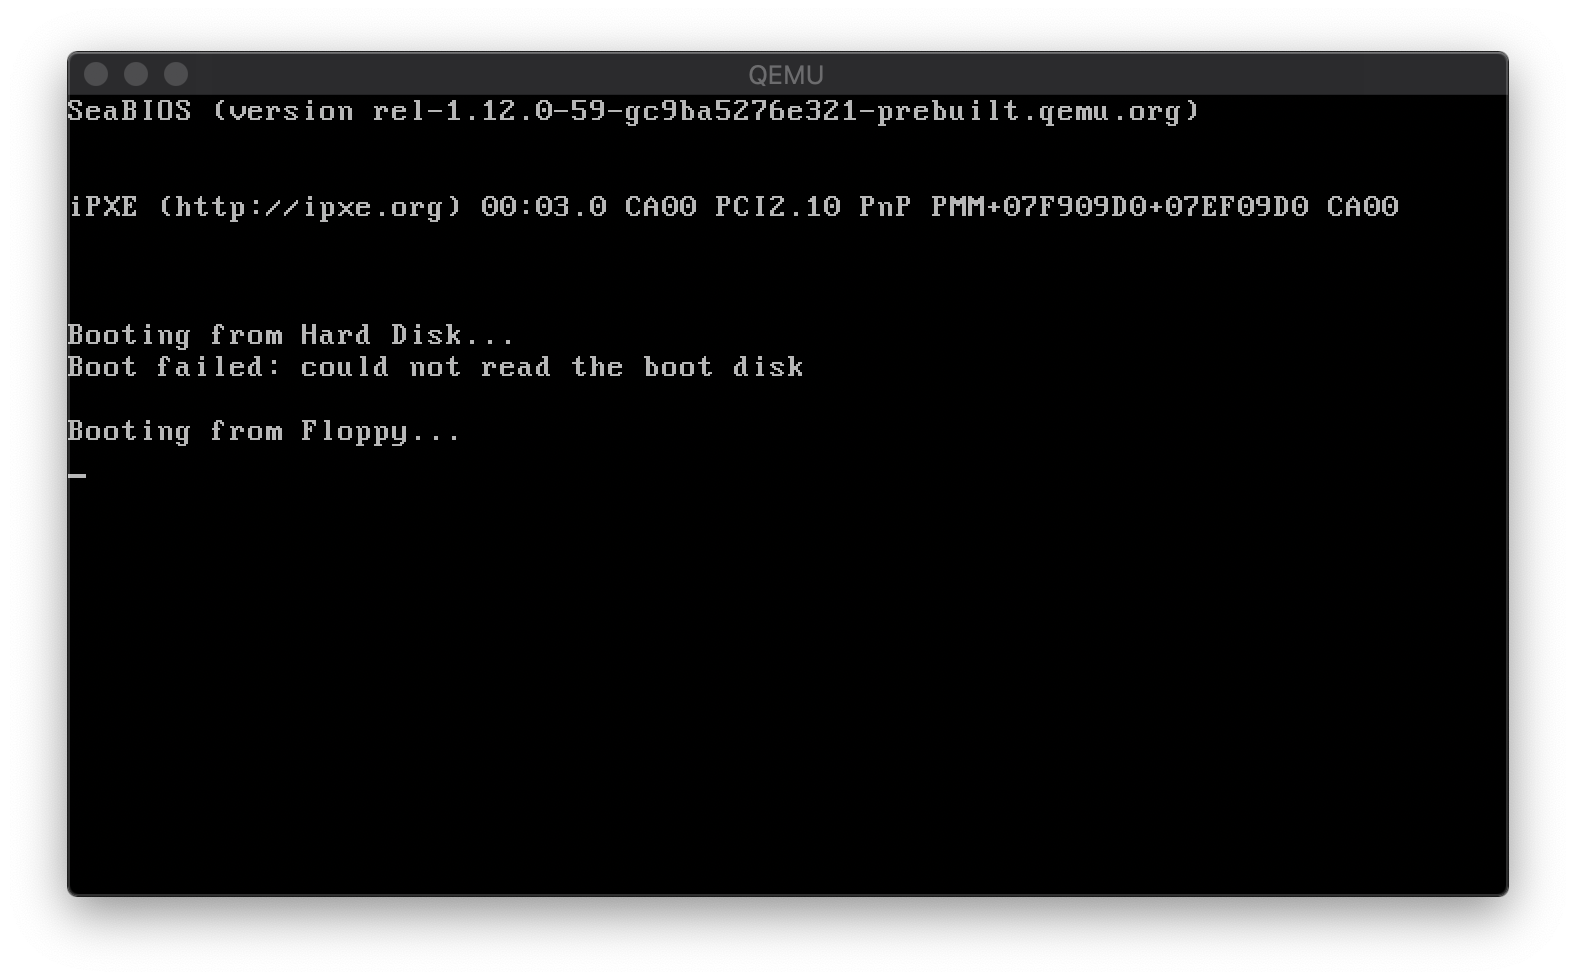 QEMU running our bootloader